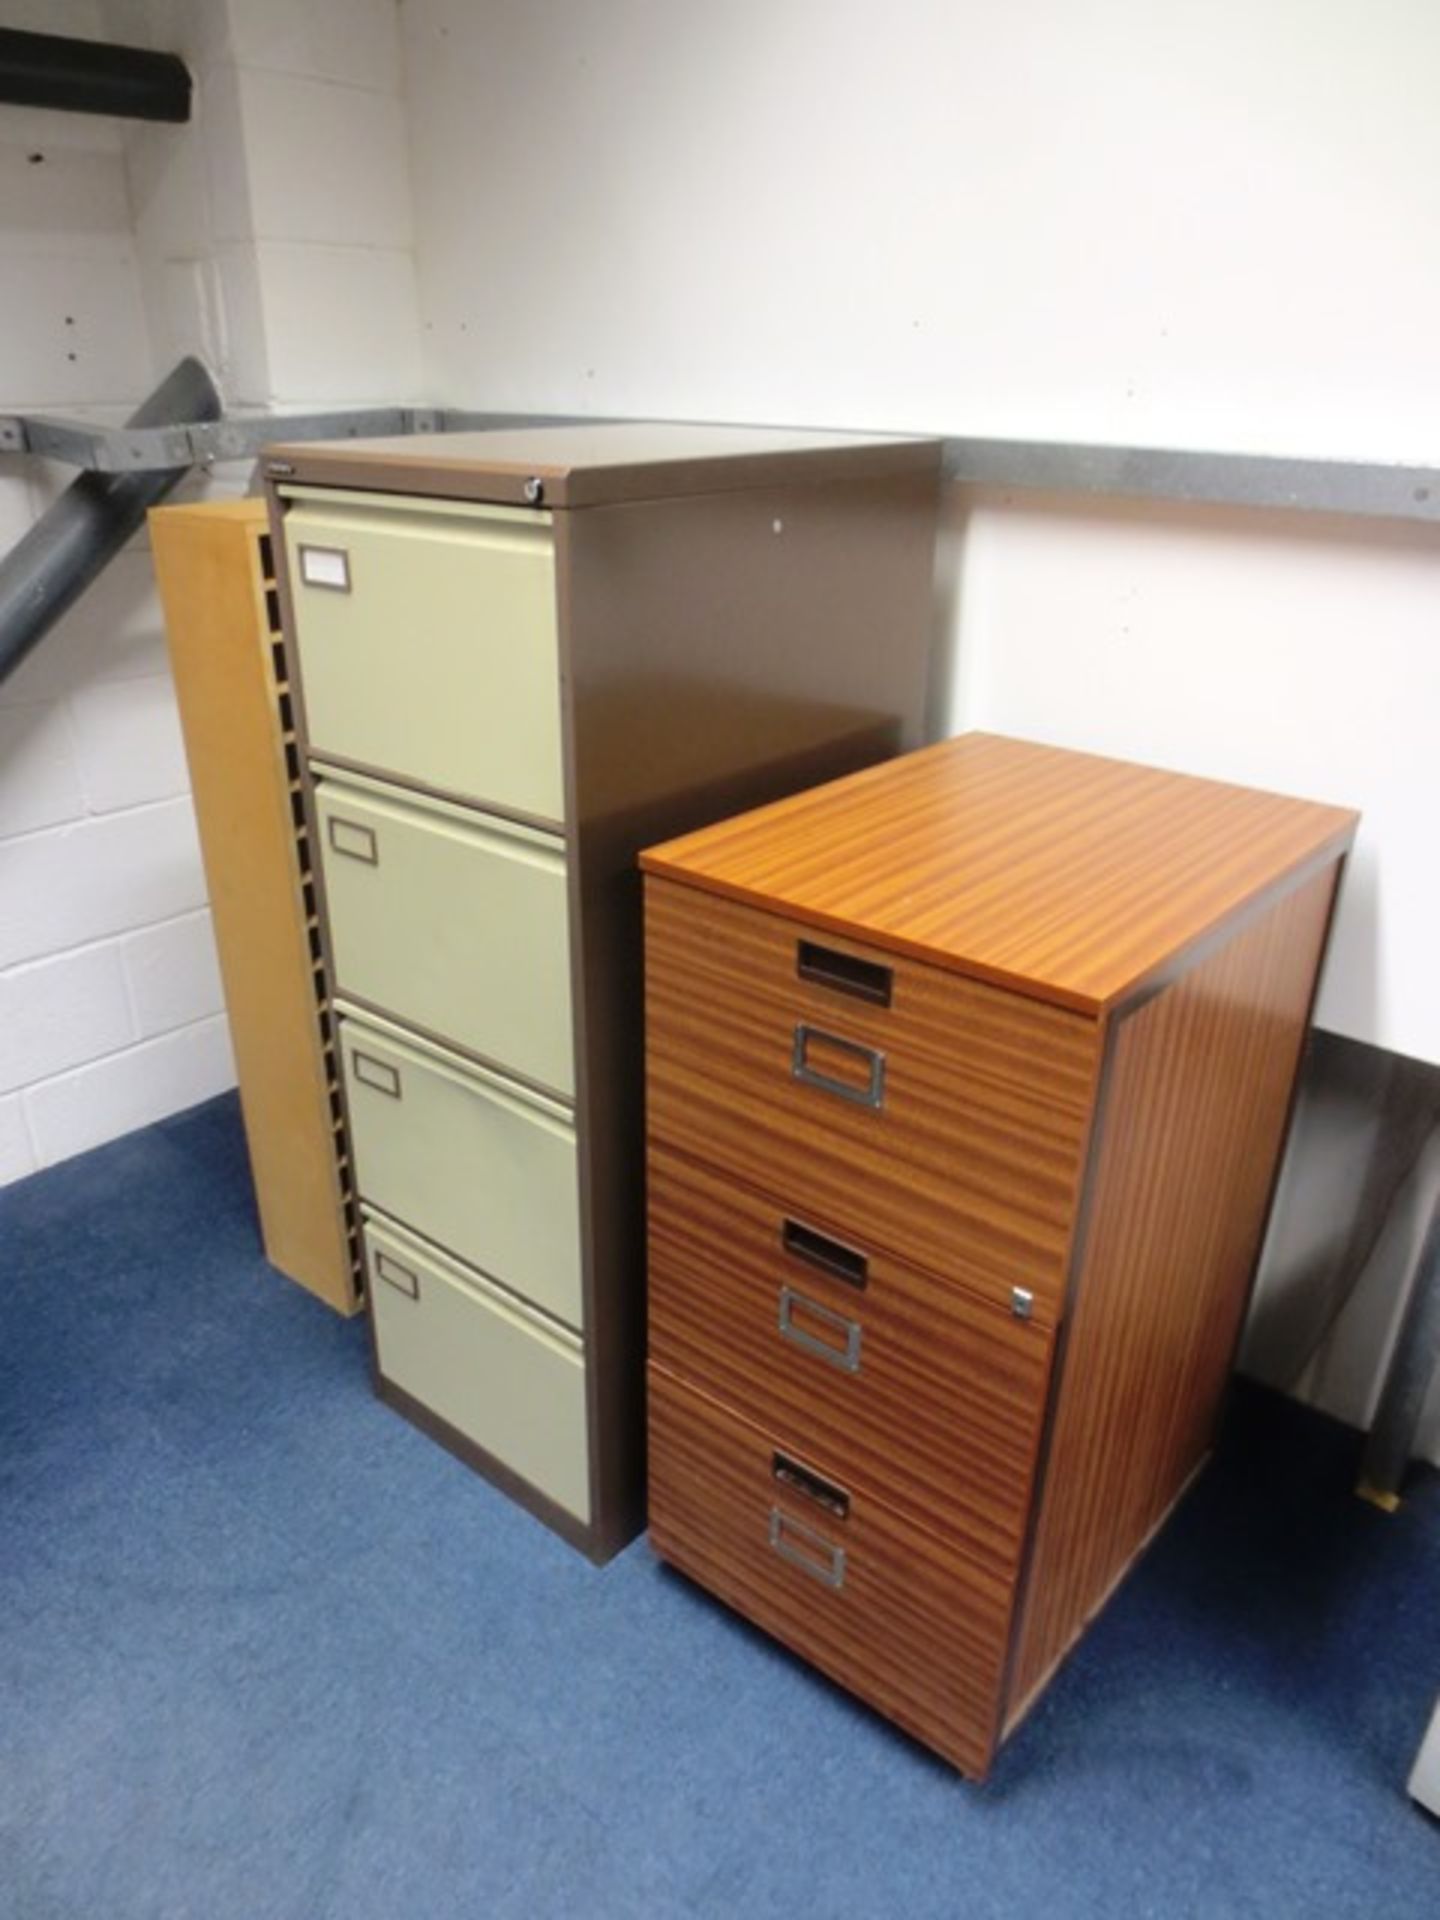 Ronco, steel 4-drawer filing cabinet, dark wood 3-drawer filing cabinet, and MDF shelving unit